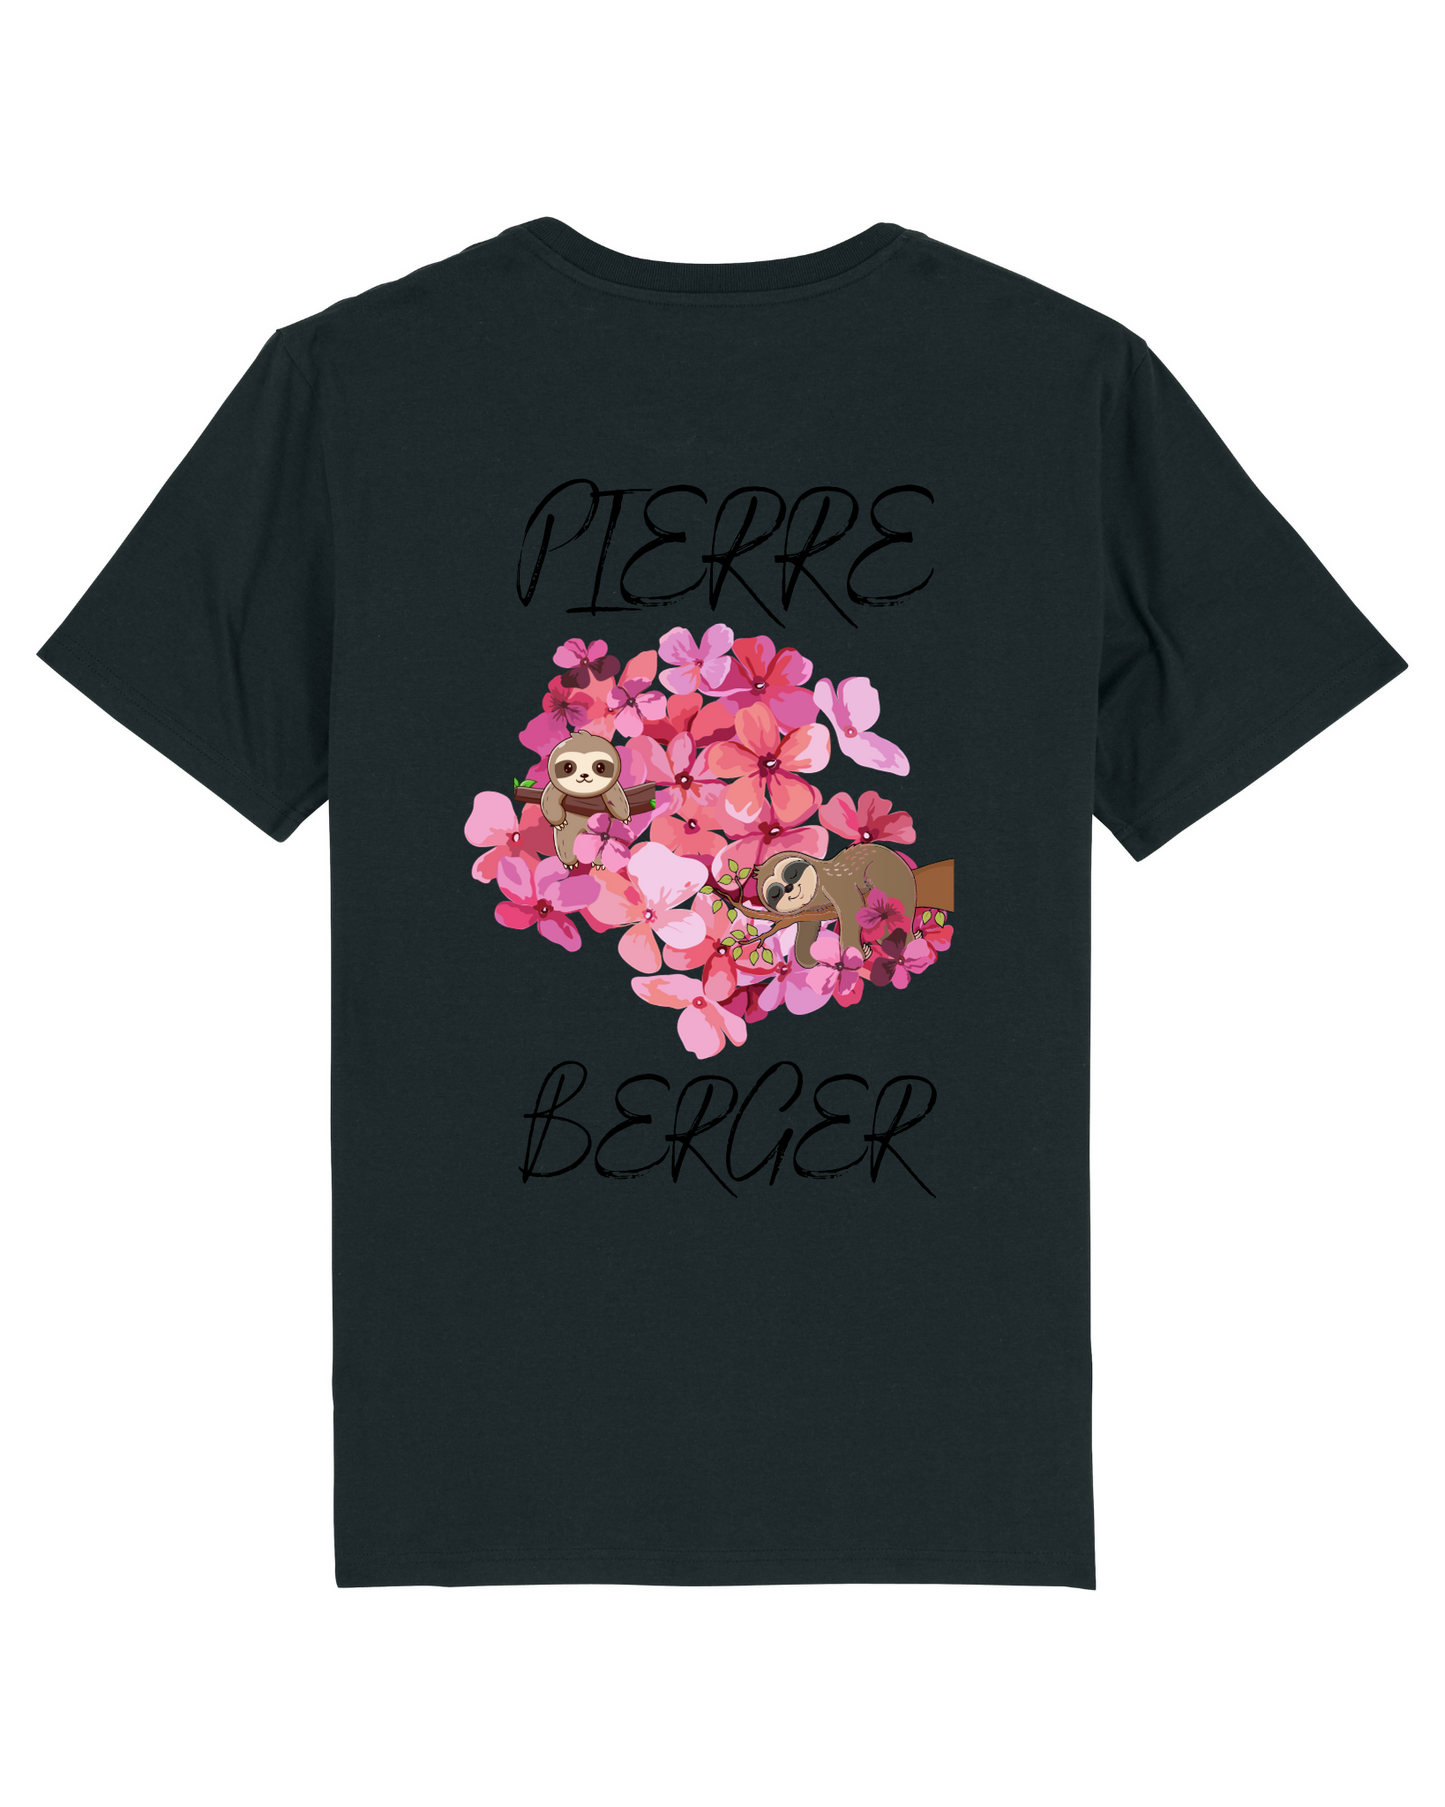 PIERRE BERGER - 100% Organic Cotton Unisex T-Shirt Black Natural Summer